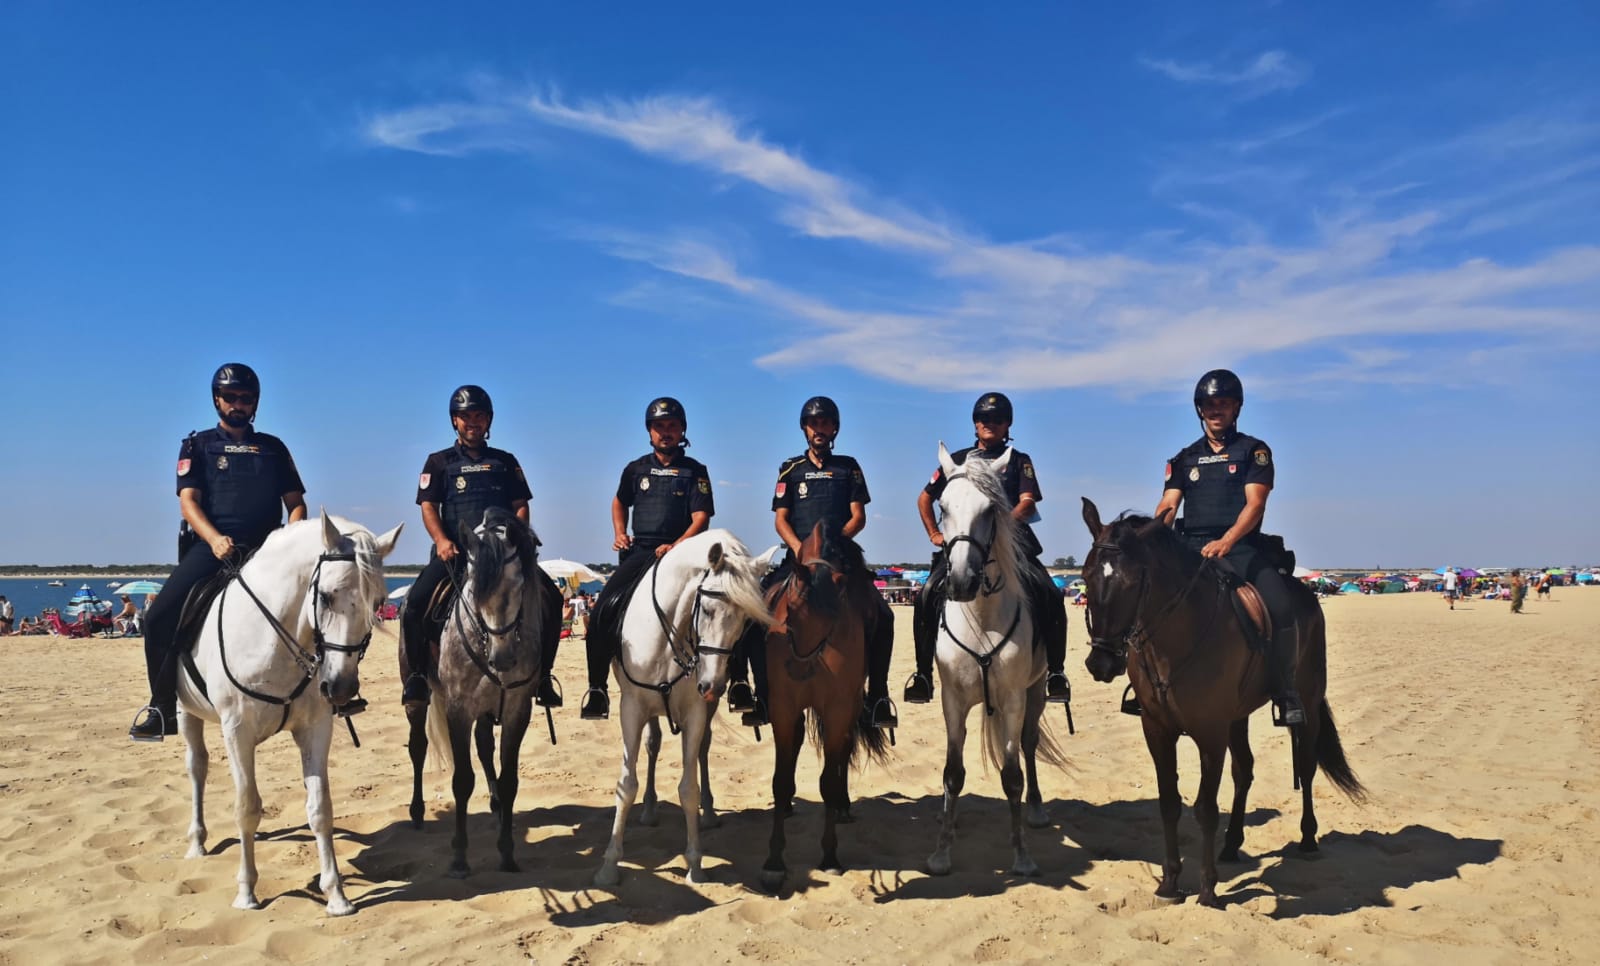 Seis policías montados a caballo sobre la arena de la playa